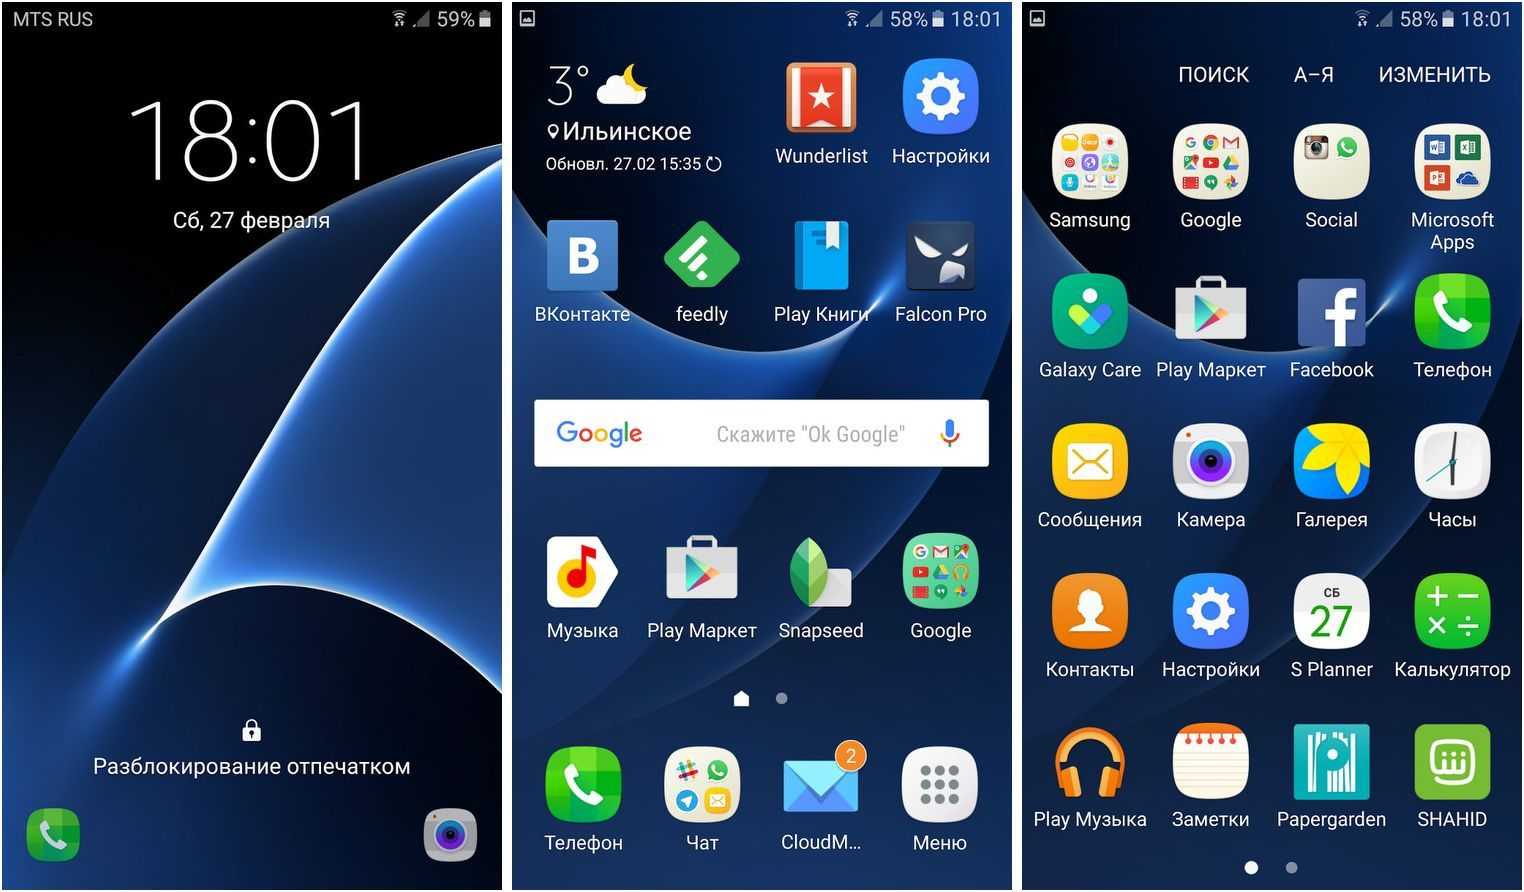 Samsung galaxy s7 edge: обзор смартфона